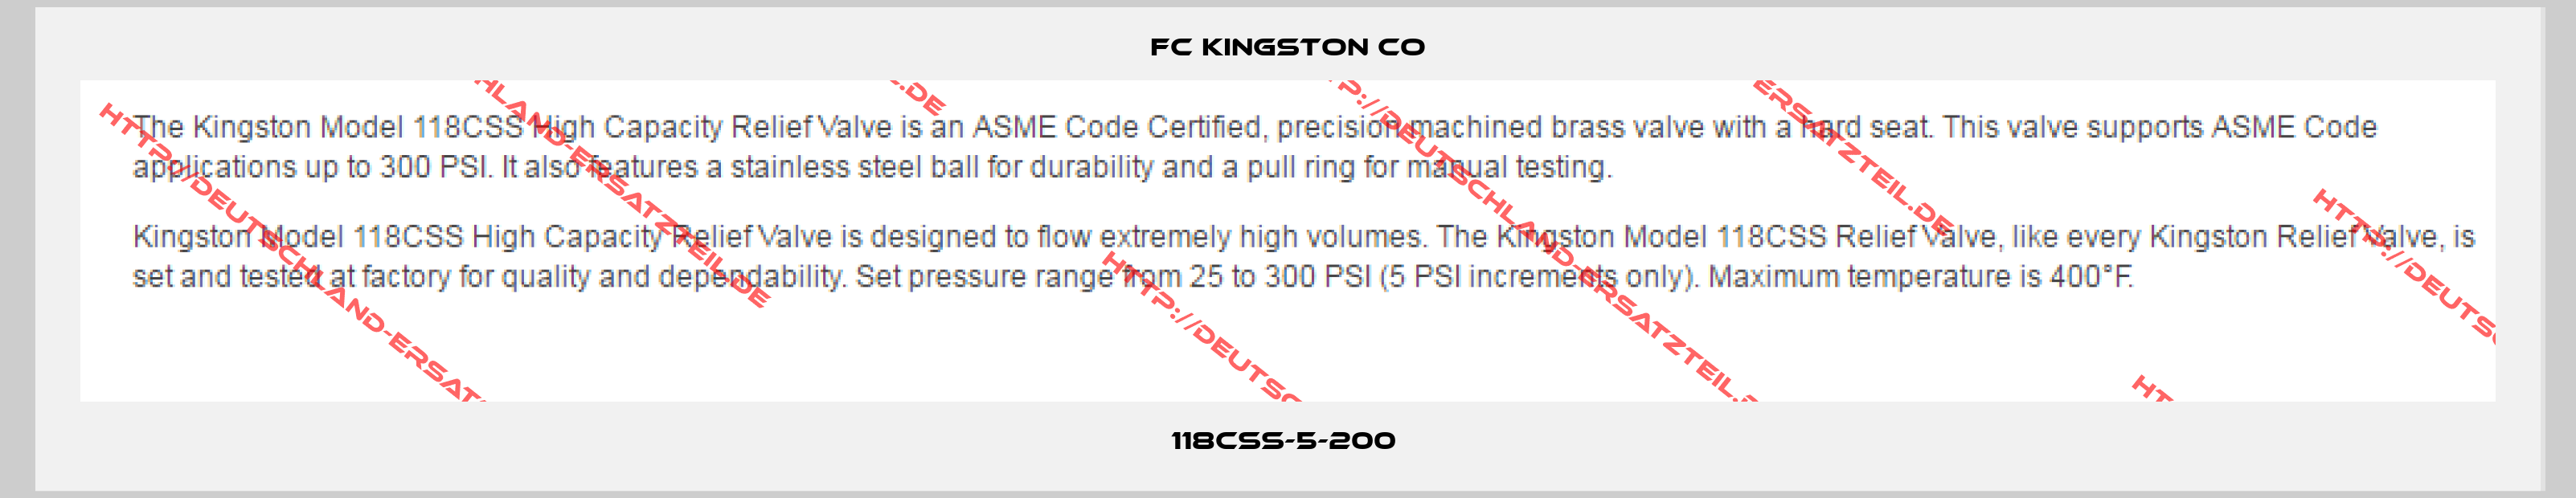 FC Kingston co-118CSS-5-200 